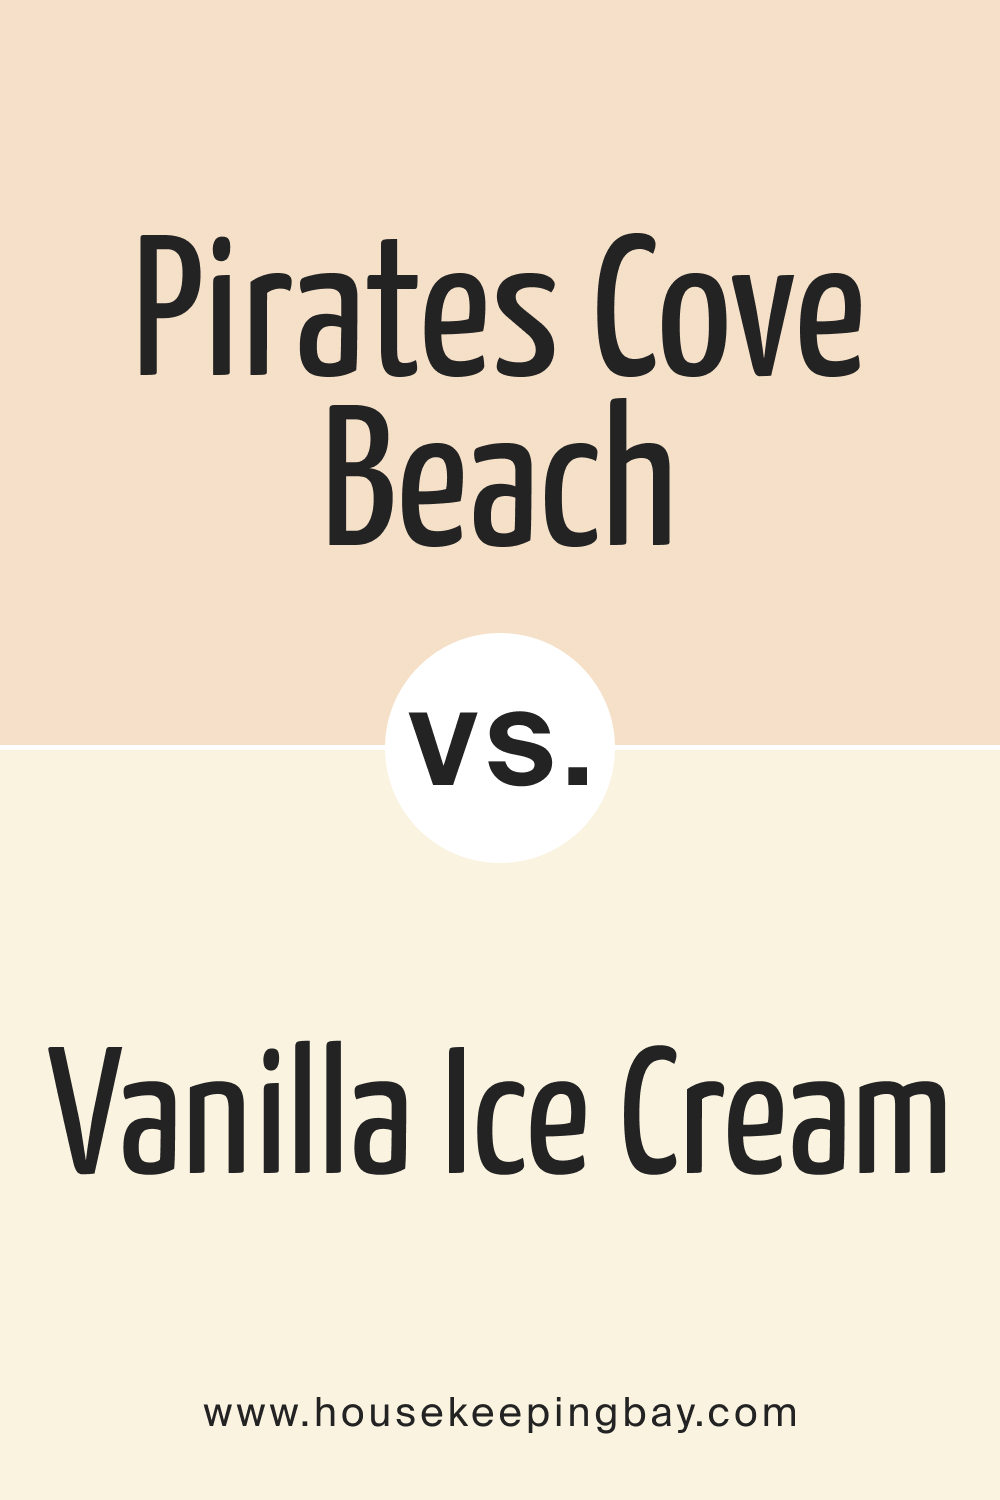 Pirates Cove Beach OC 80 vs. OC 90 Vanilla Ice Cream